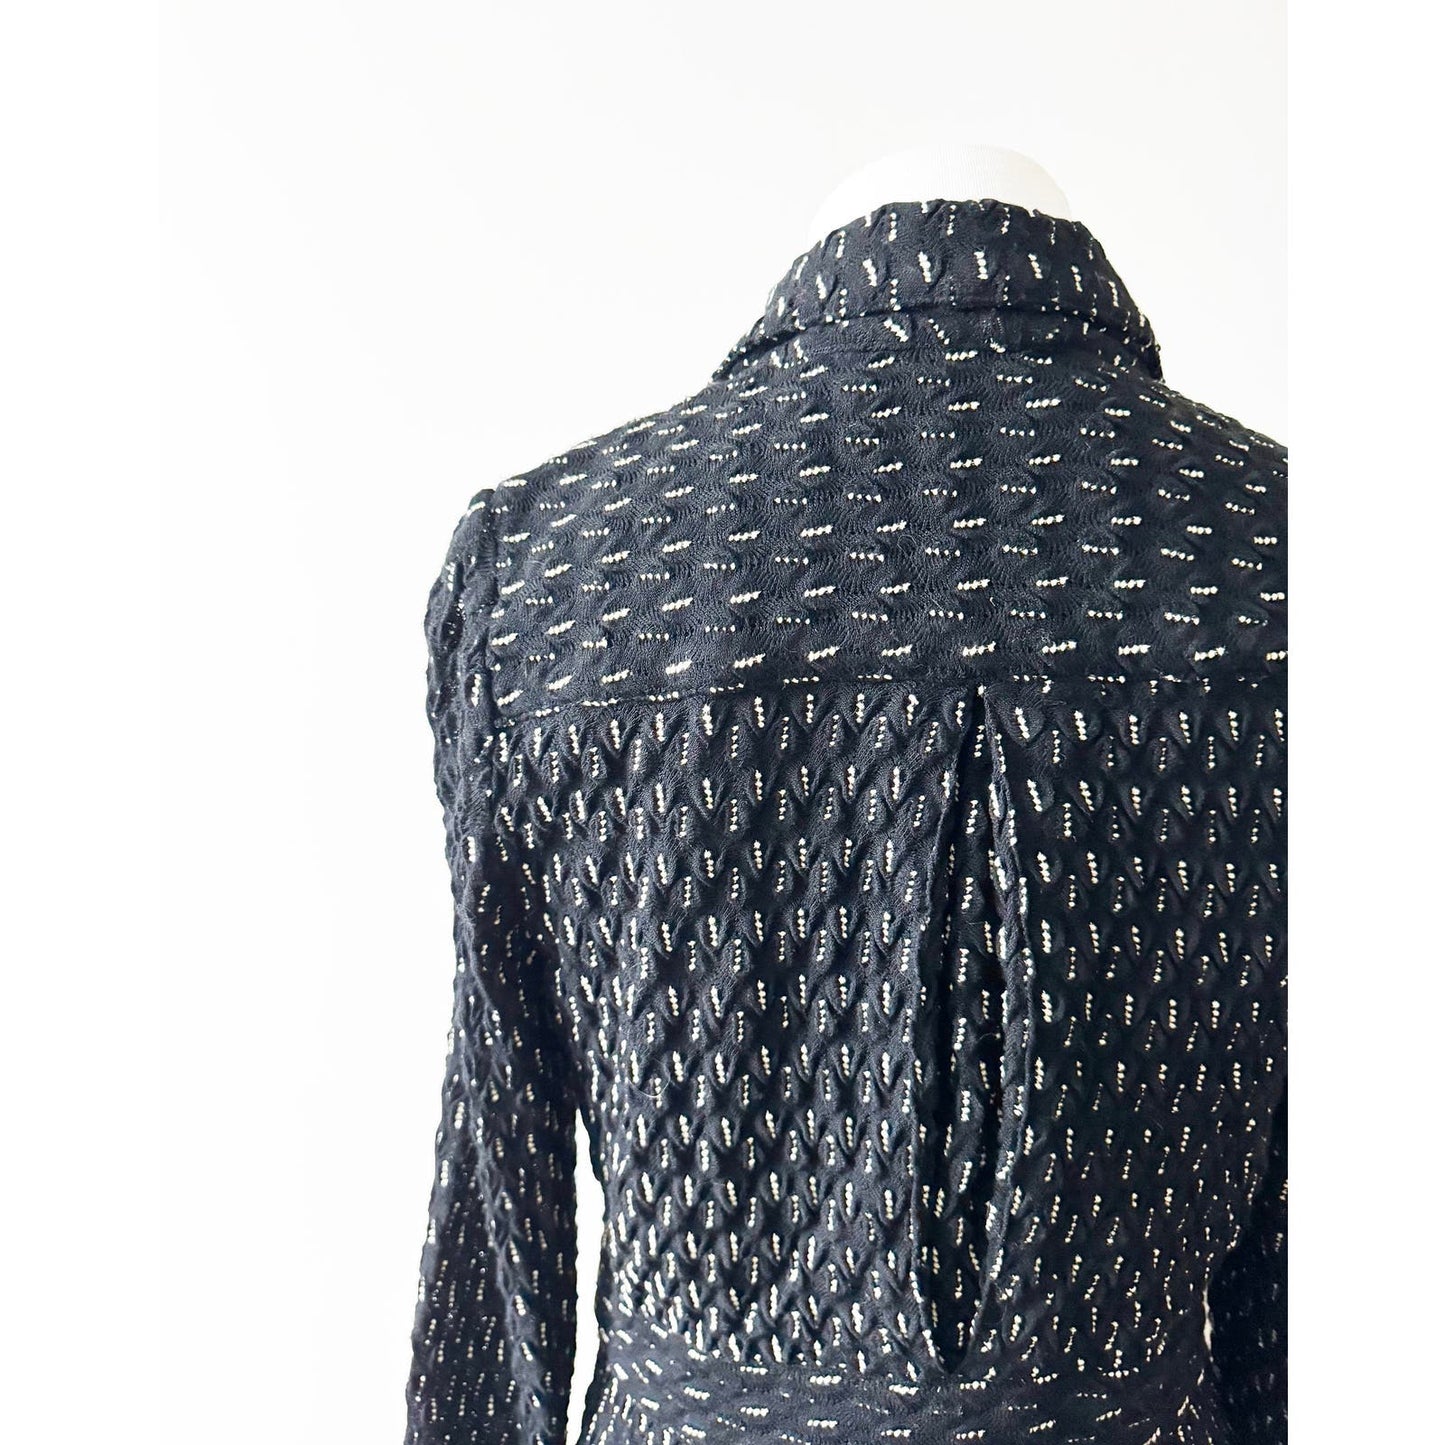 Y2k ANNA SUI Black Knit Blazer with White Details | Size US 4